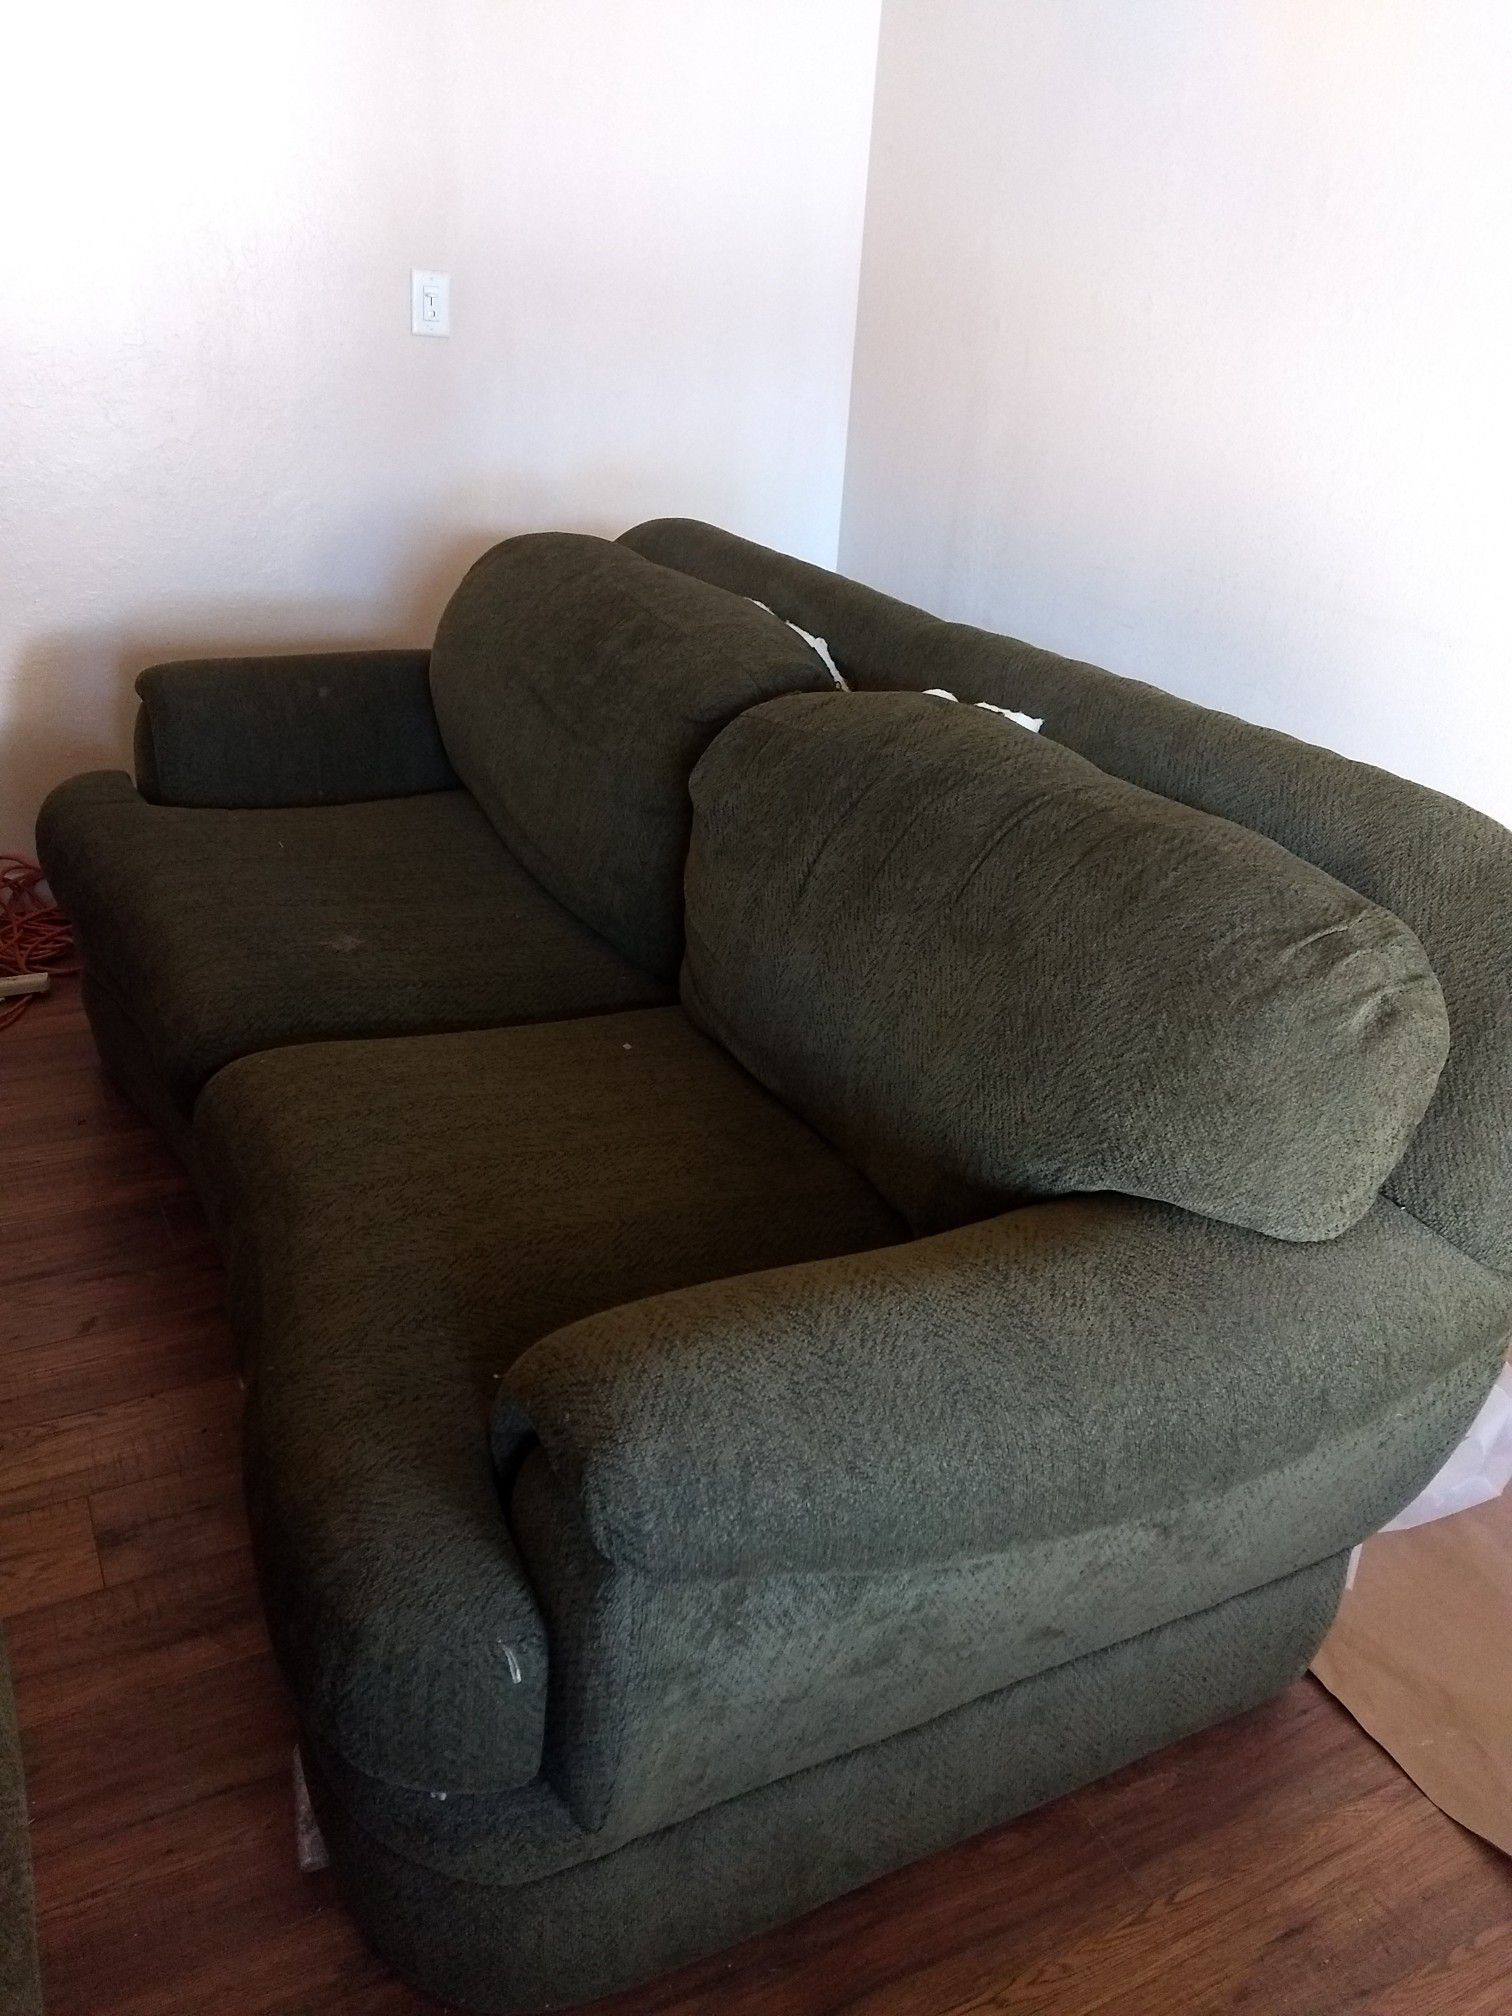 Big overstuffed couch set